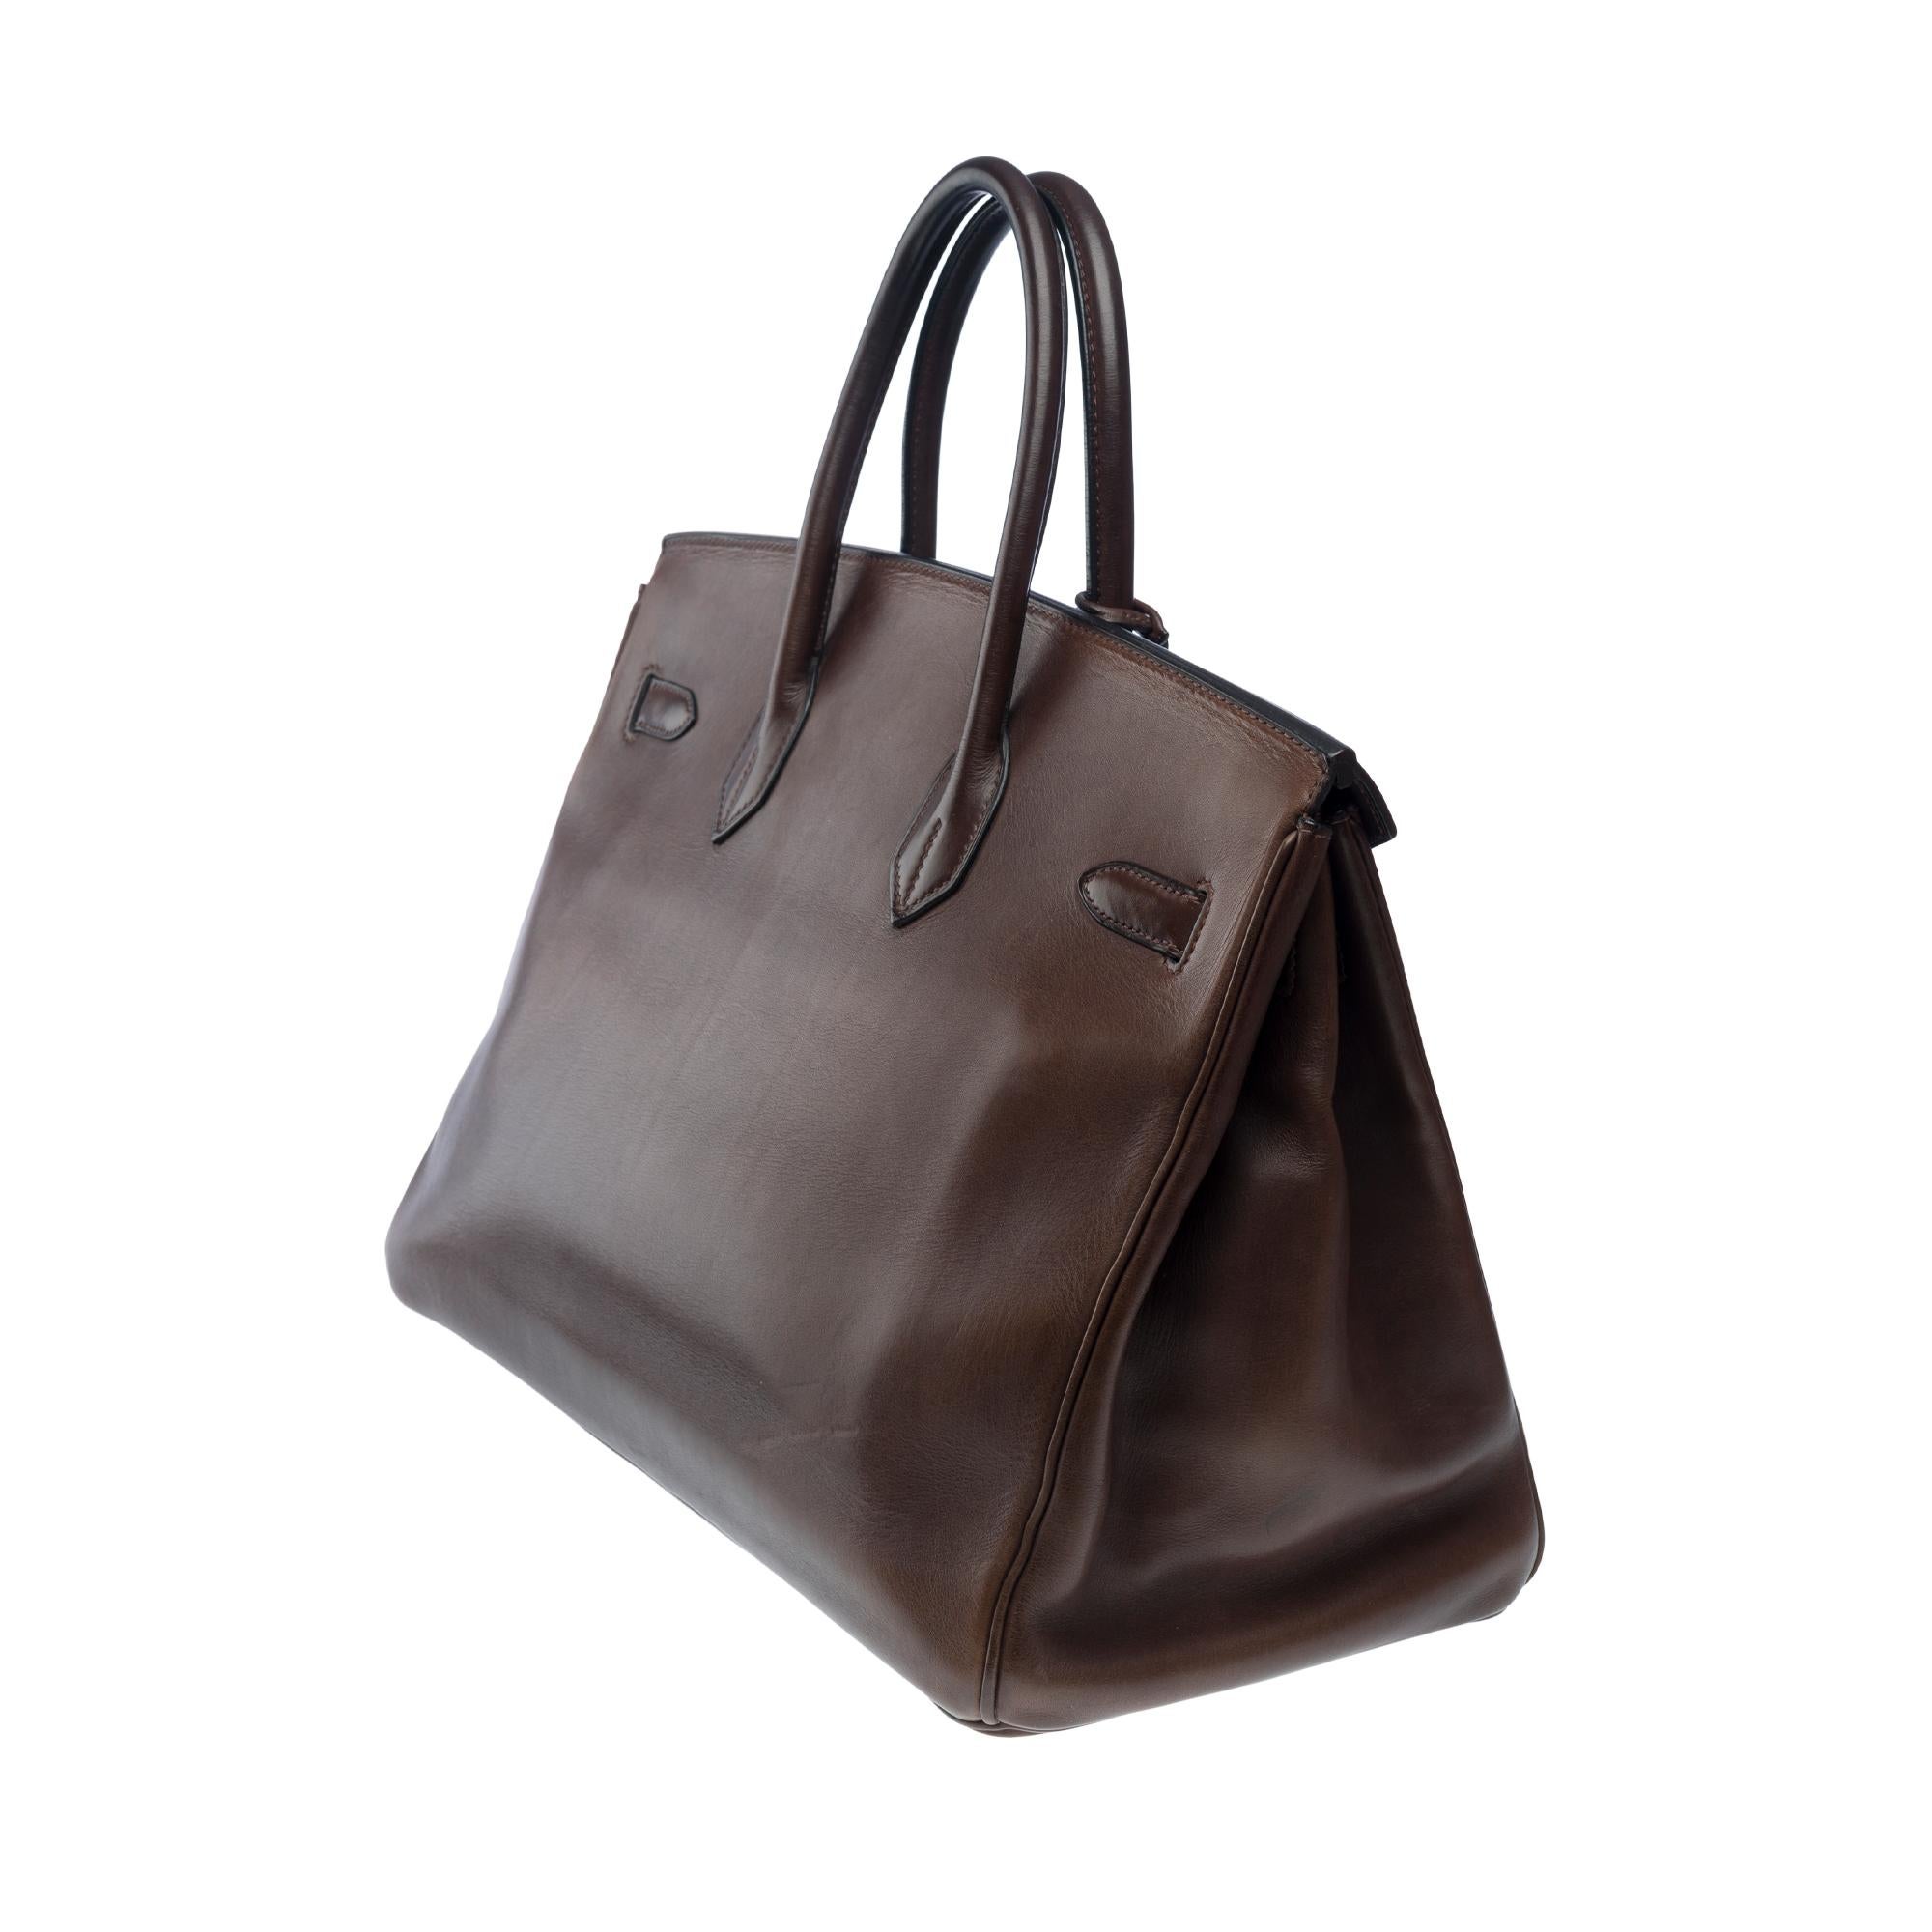 Rare & Exceptional Hermès Birkin 35 handbag in Ebony Brown Barenia leather, GHW For Sale 1